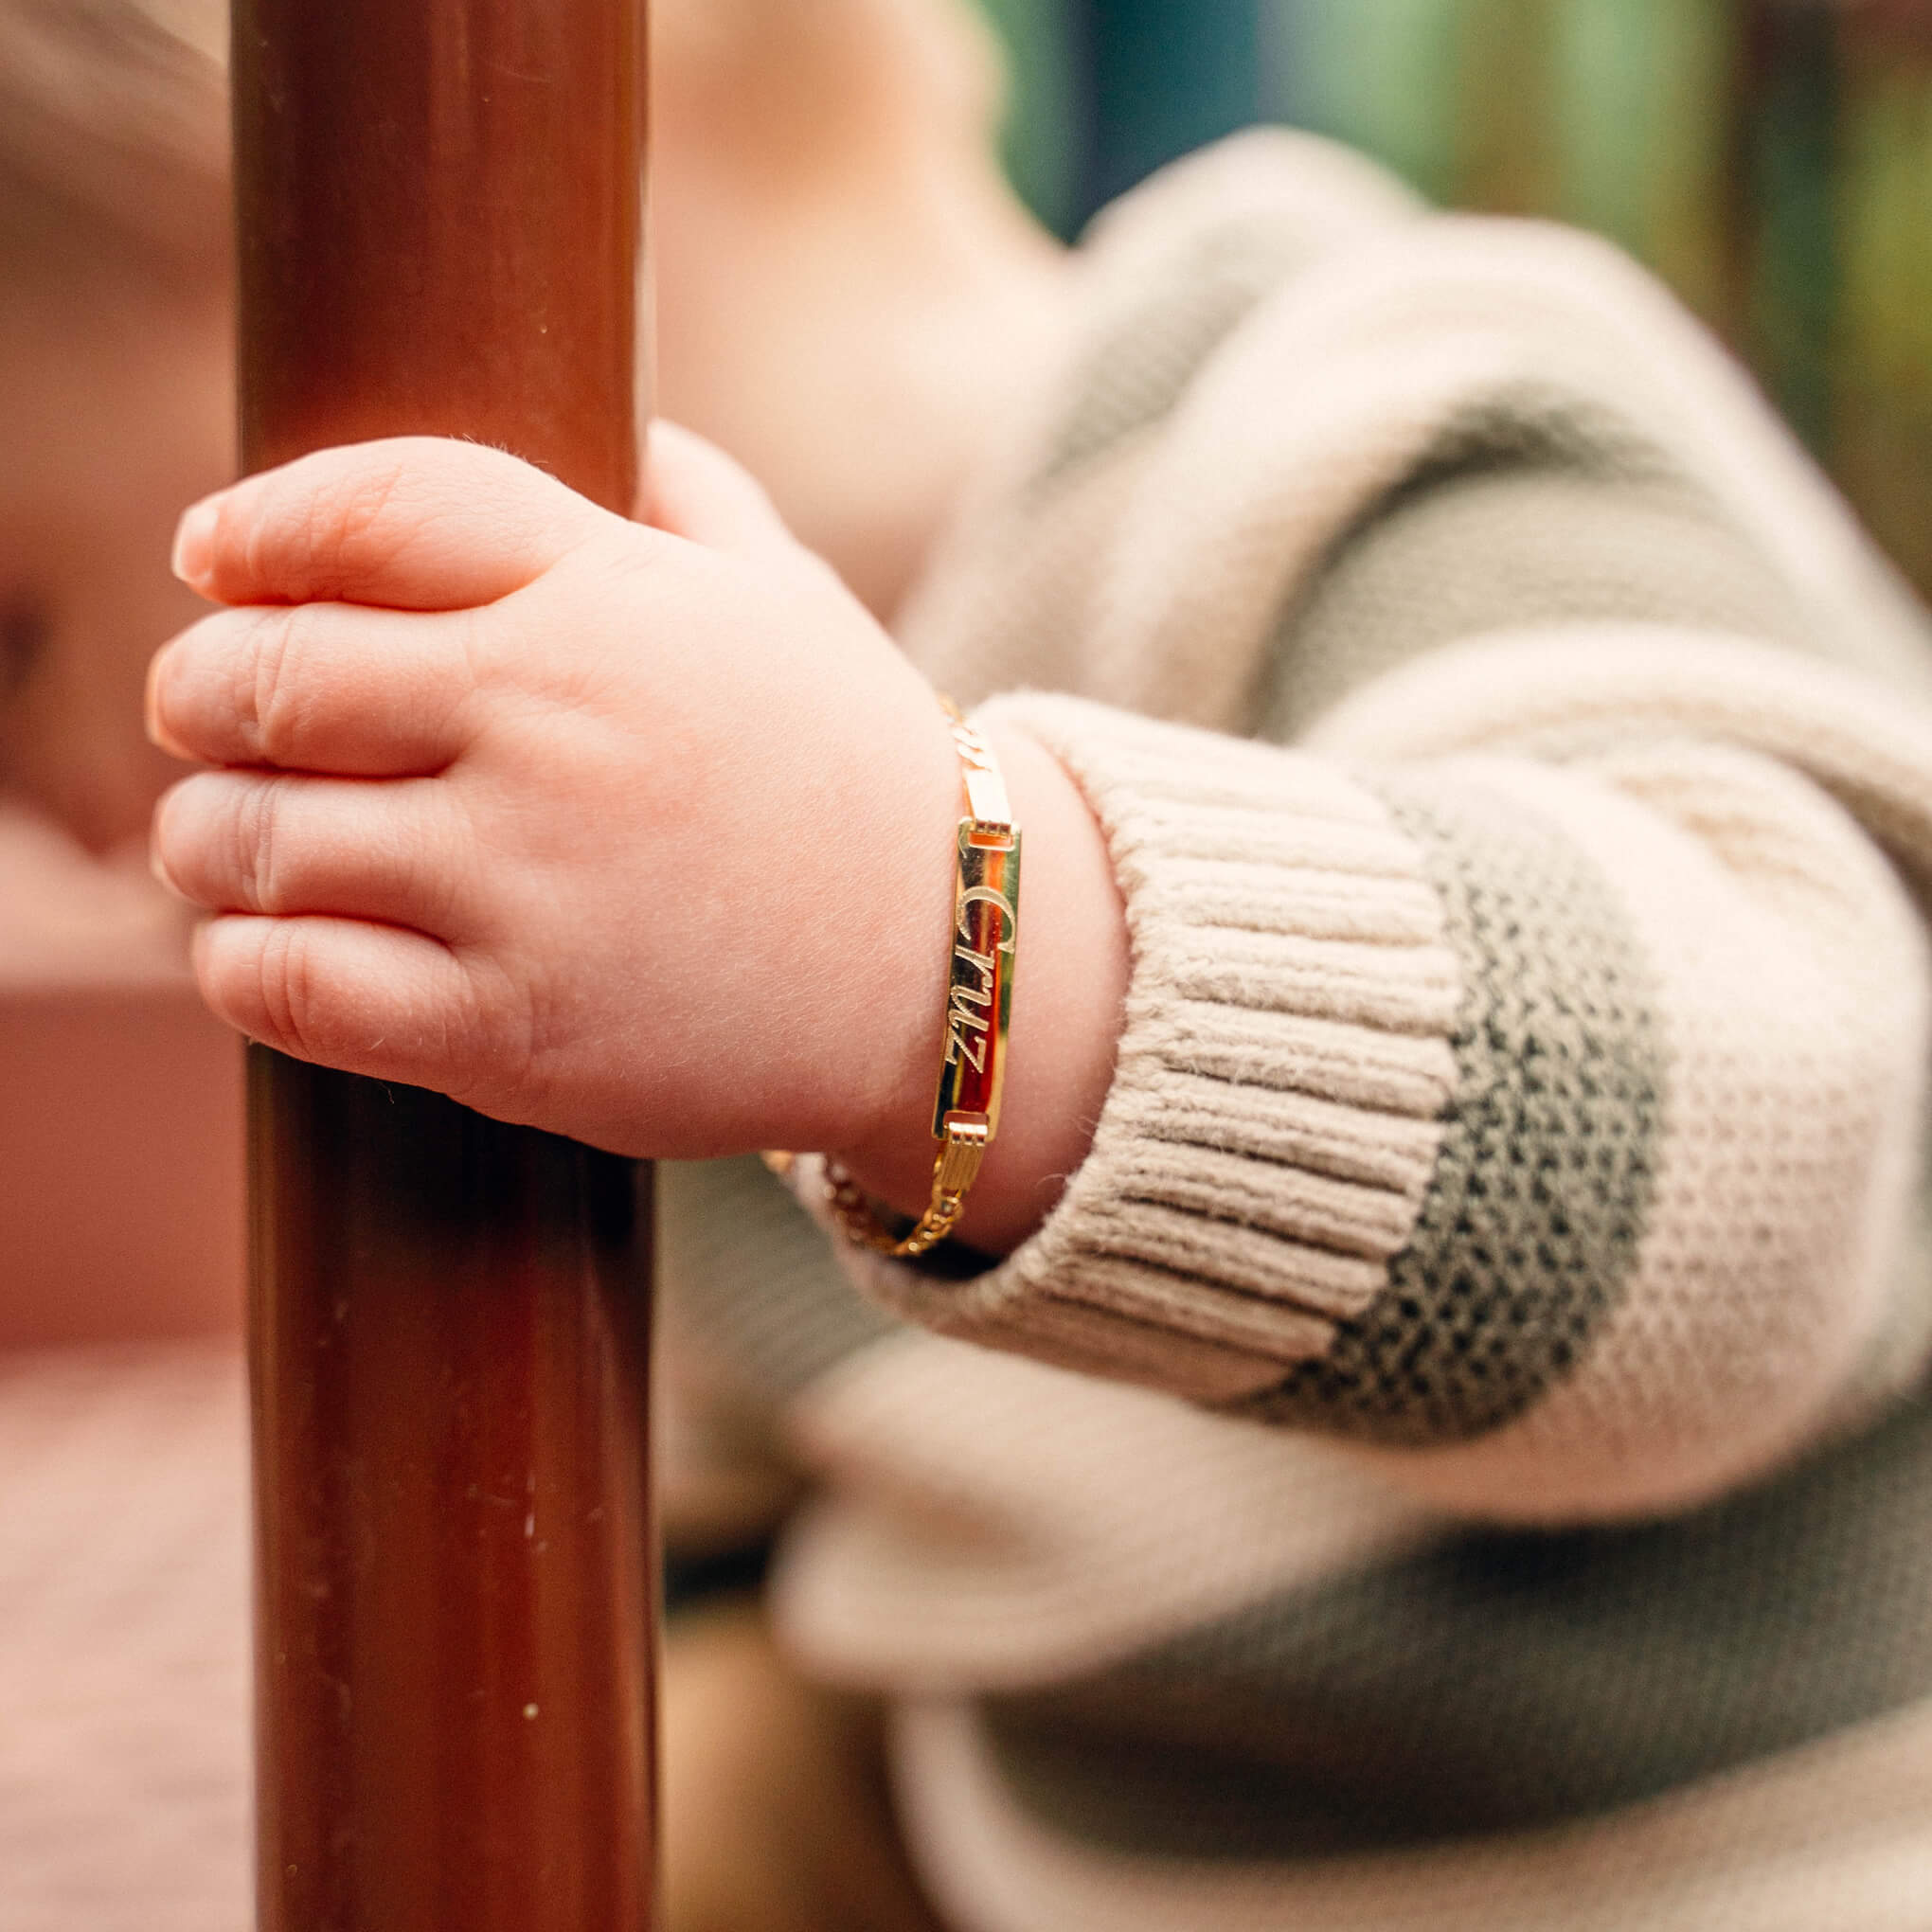 American Designs 14K Gold-Plated Bangle Bracelet Expandable Adjustable Baby  Kids Jewelry - Walmart.com